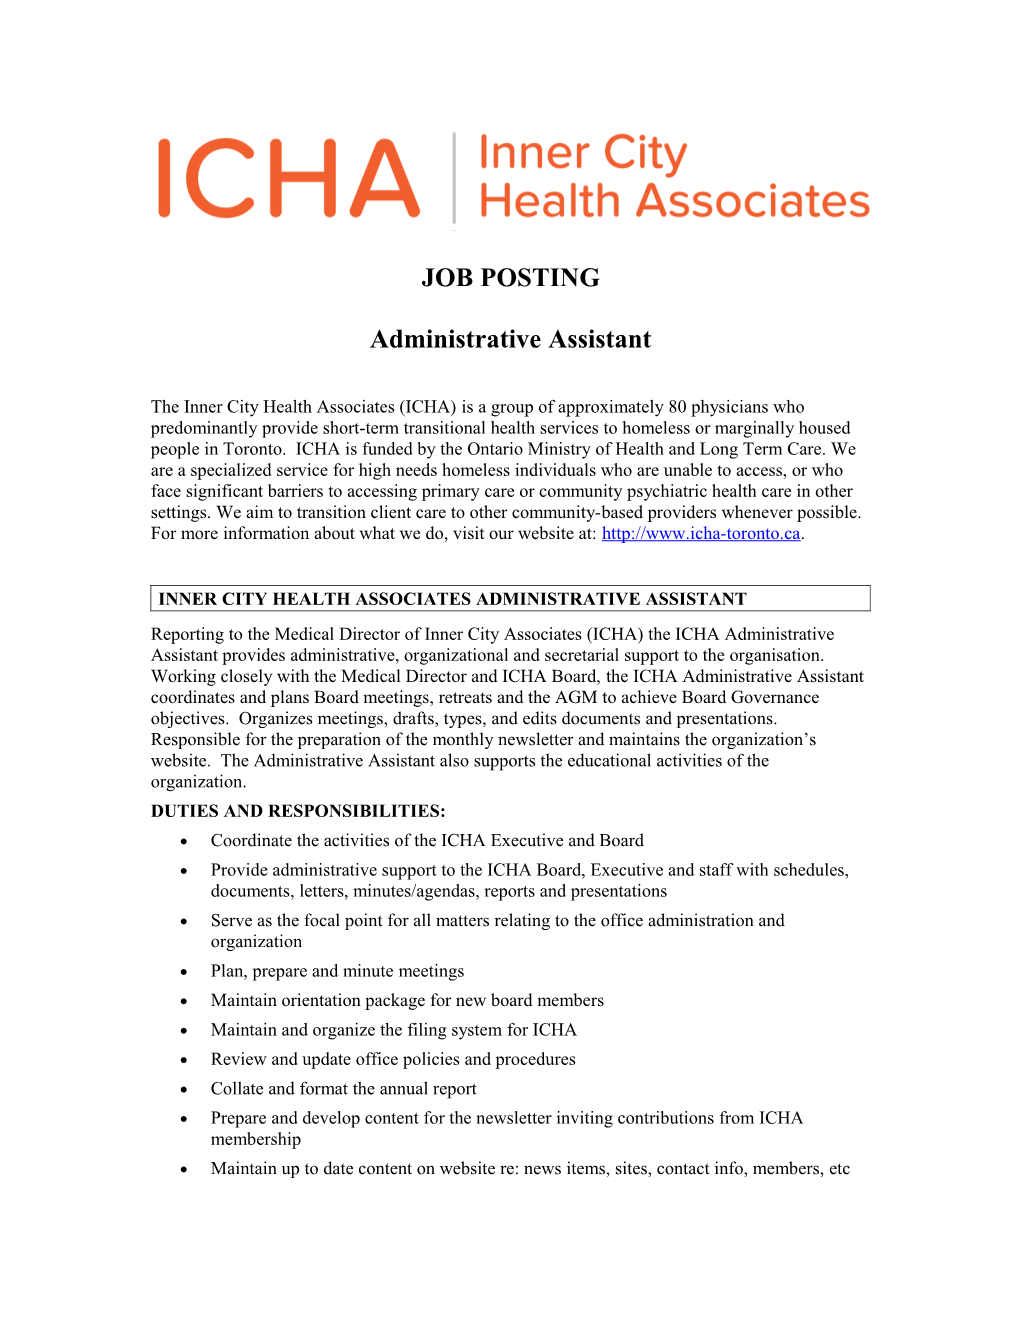 Inner City Health Associates Administrative Assistant